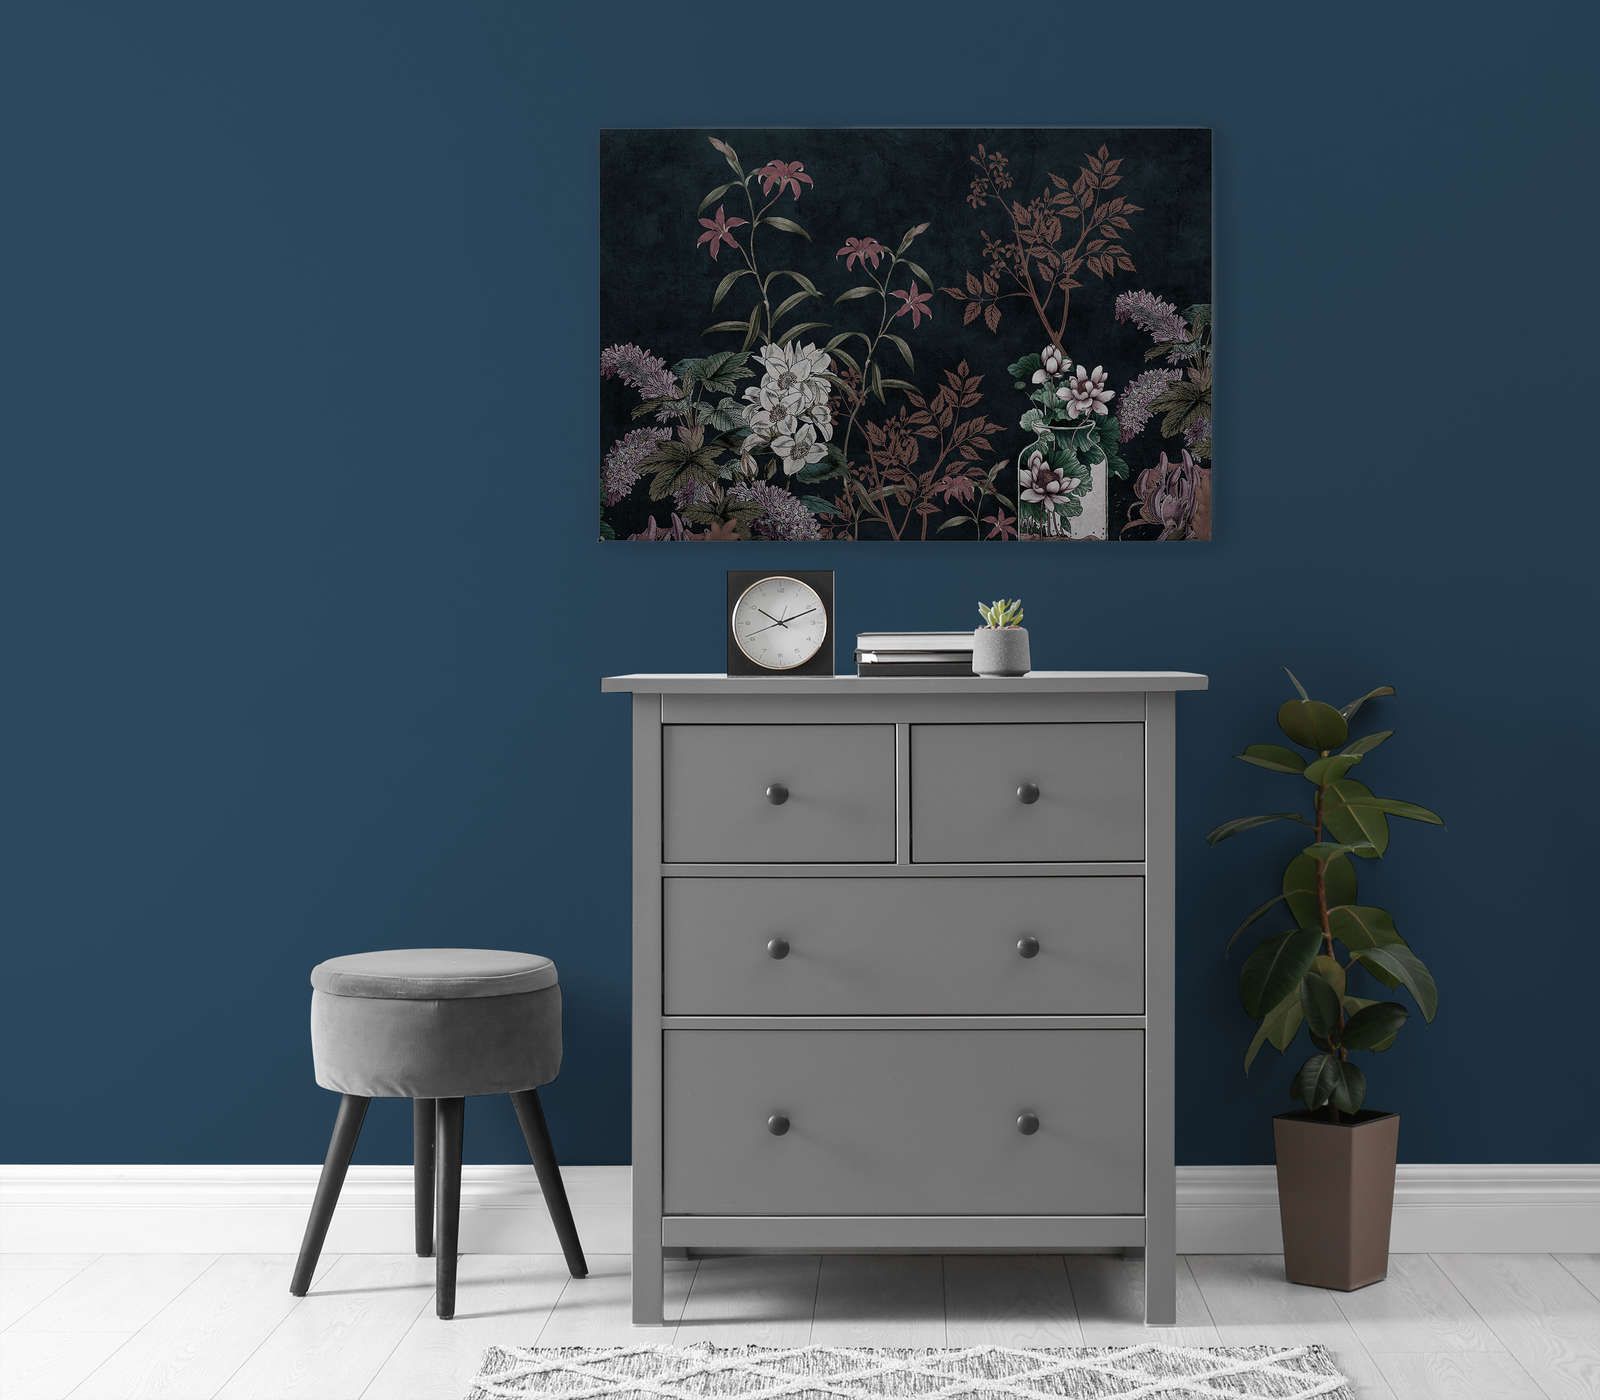             Dark Room 2 - Toile noire Botanical Muster Rosa - 0,90 m x 0,60 m
        